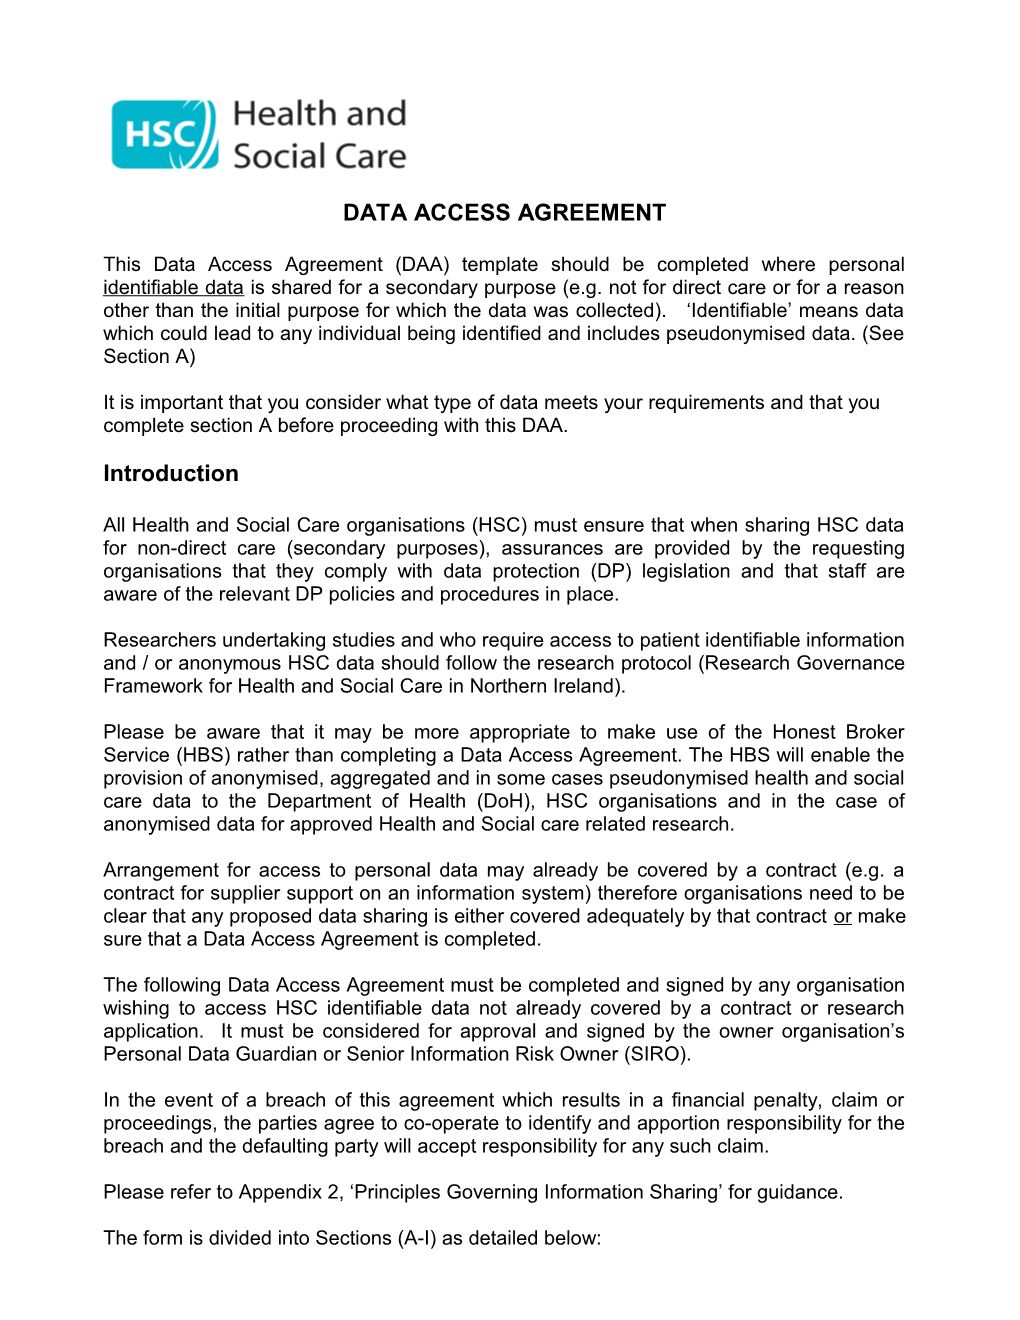 Appendix 2 - Data Access Agreement Template